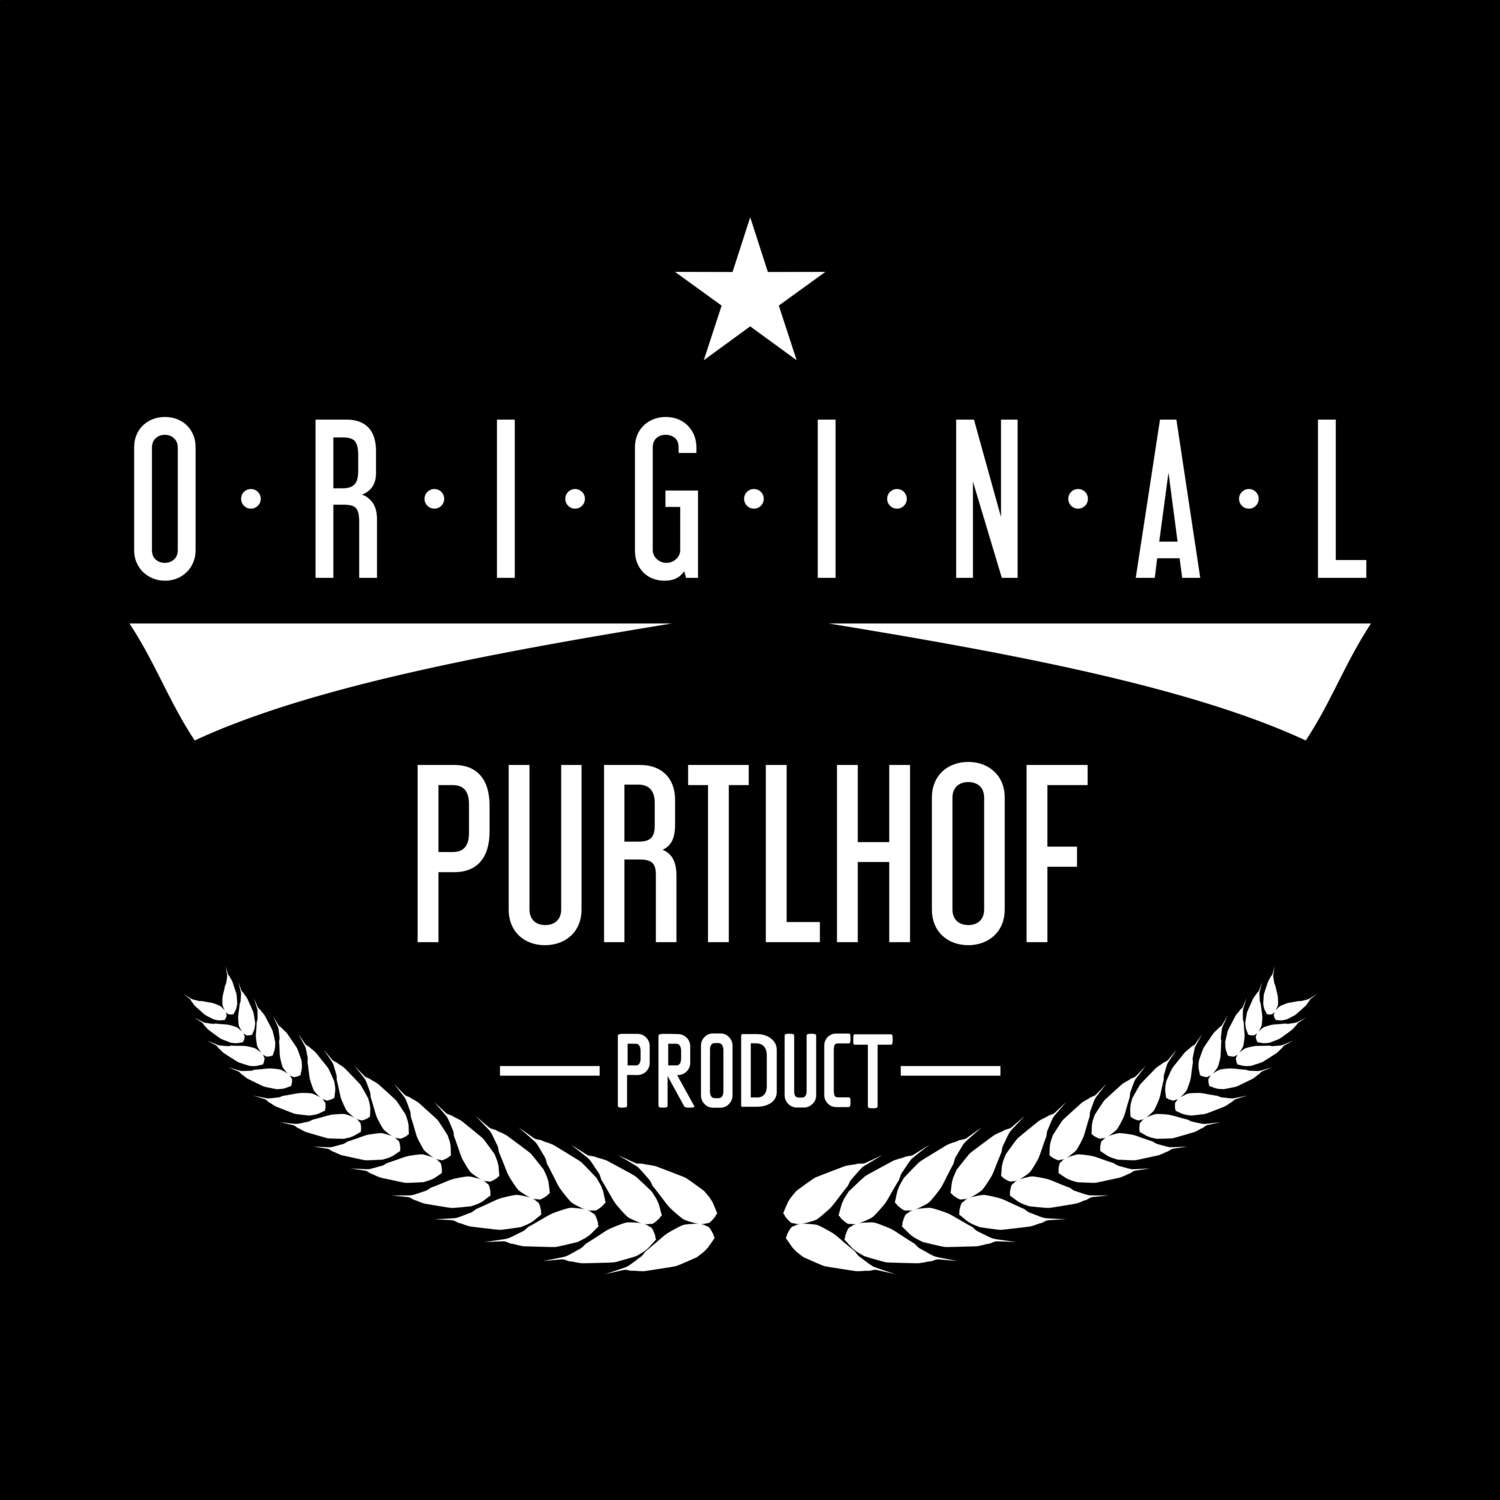 Purtlhof T-Shirt »Original Product«